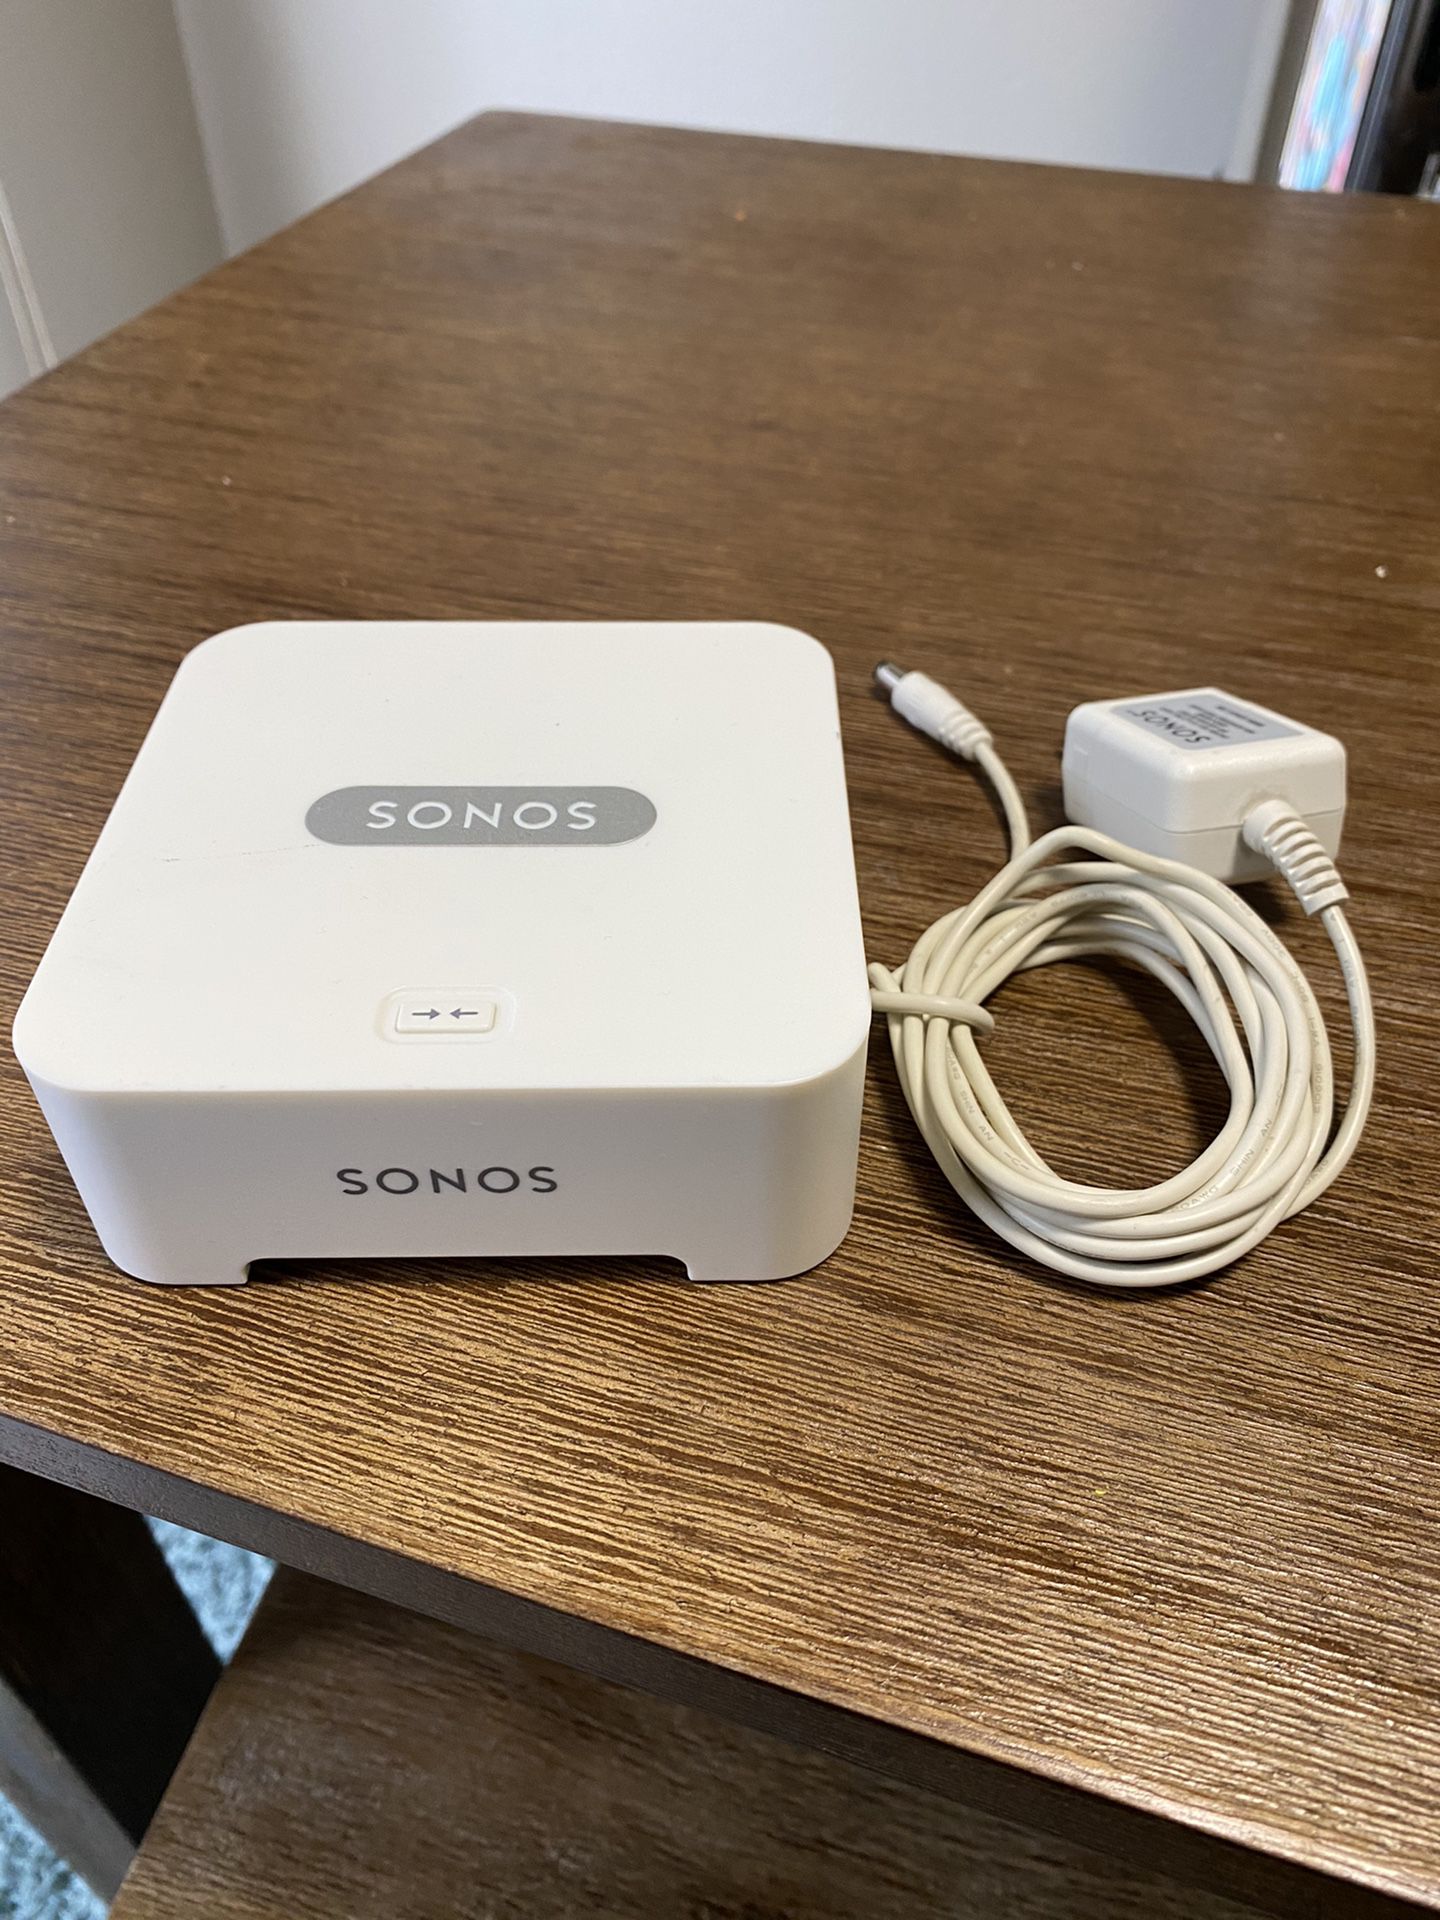 SONOS BRIDGE for Sonos Wireless Network